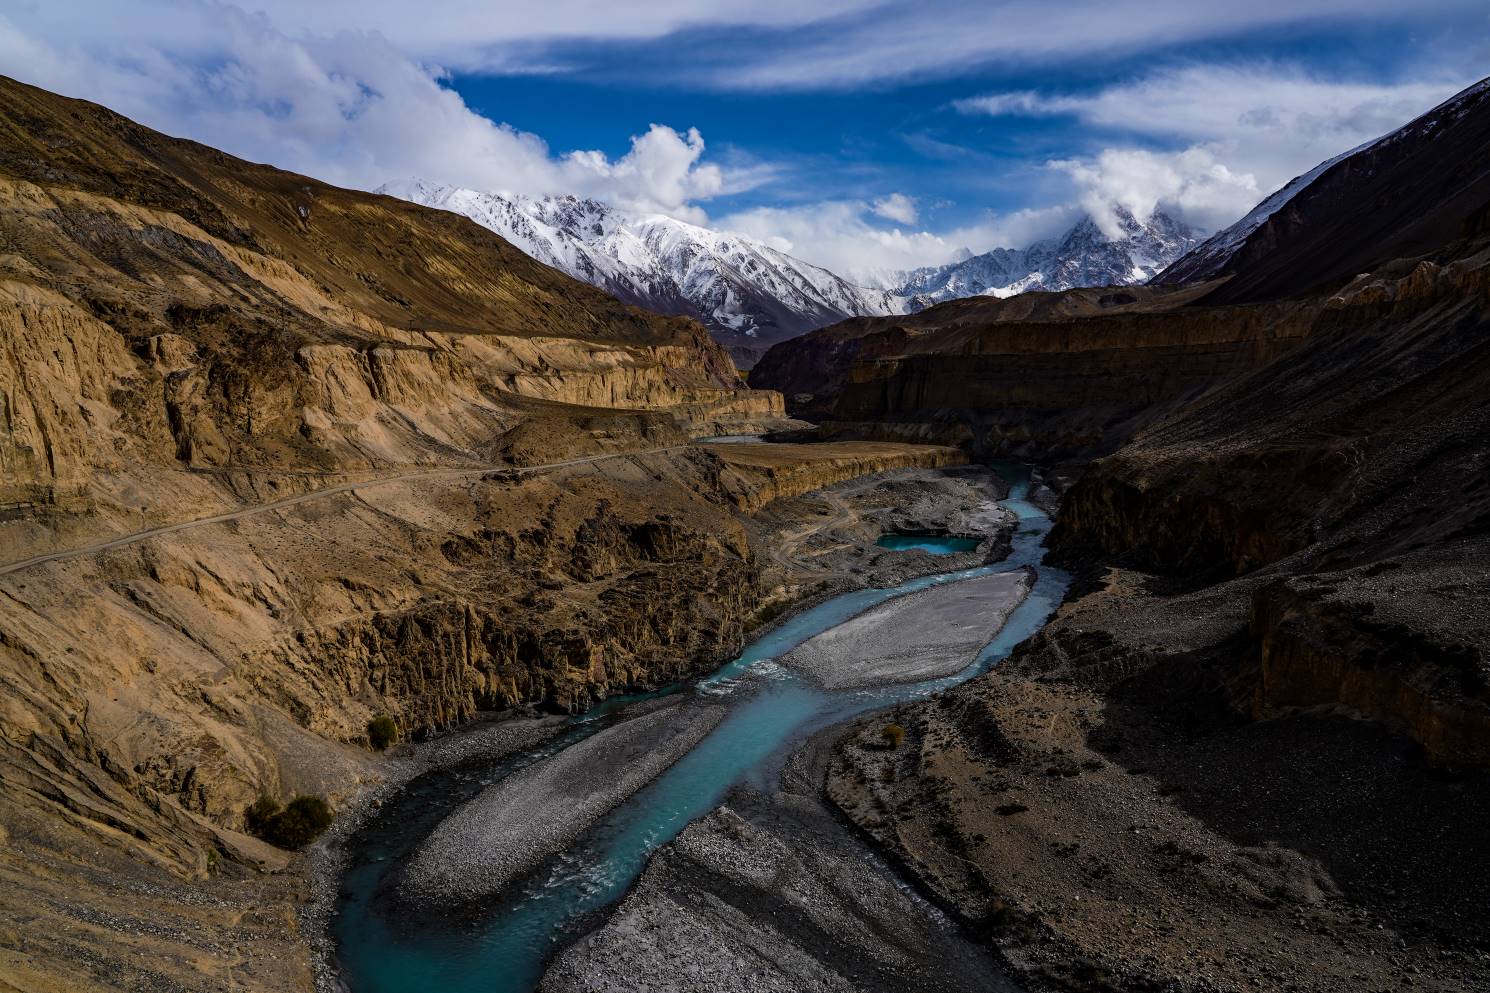 epic overlook view of the chapursan river in chapursan valley pakistan